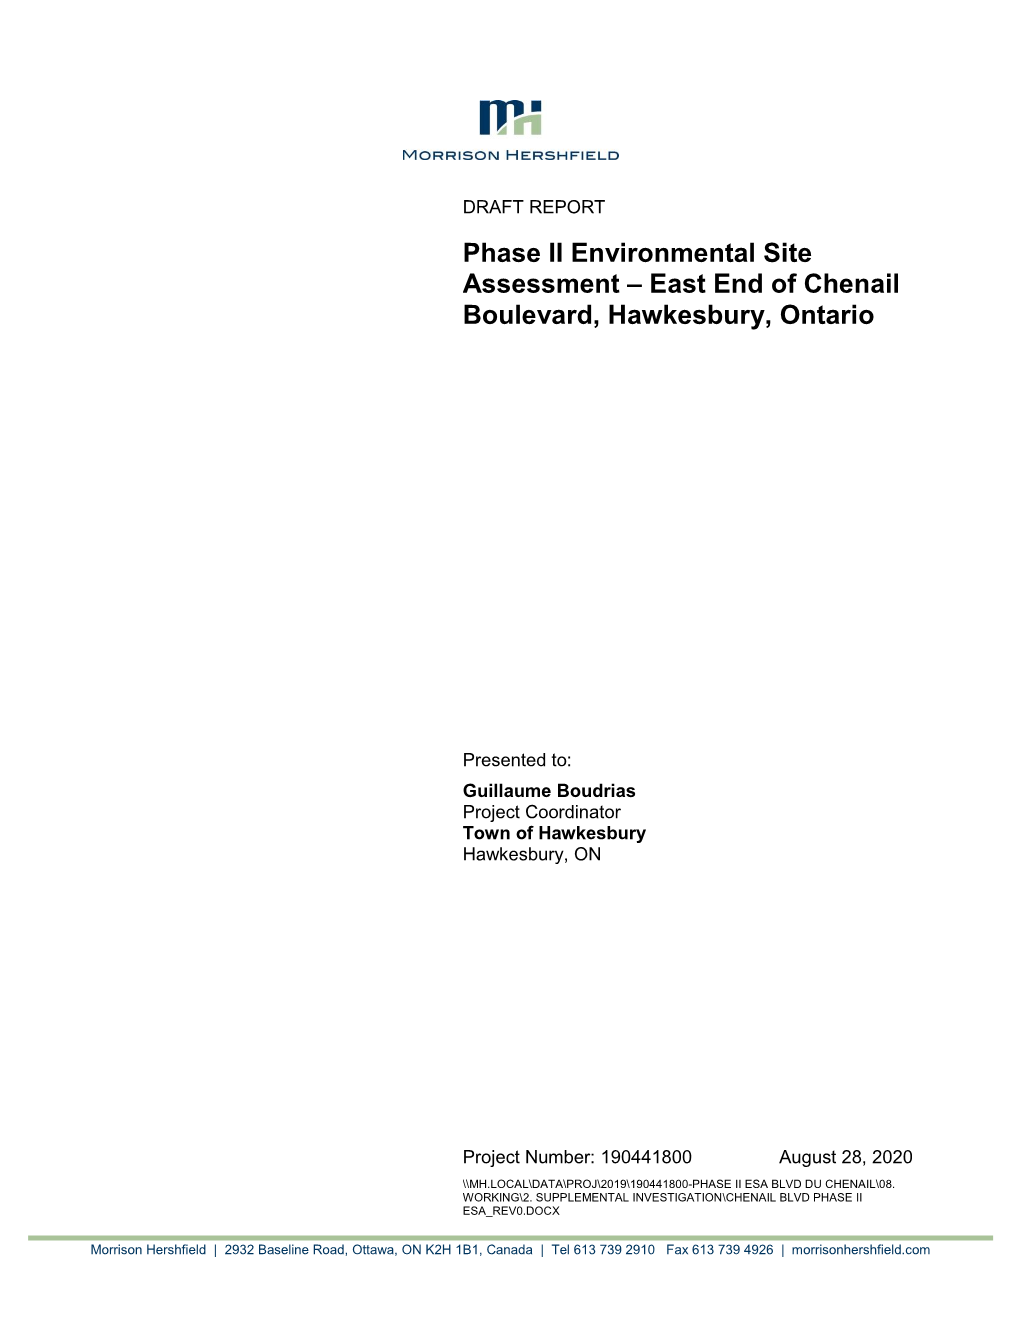 Phase II Environmental Site Assessment – East End of Chenail Boulevard, Hawkesbury, Ontario